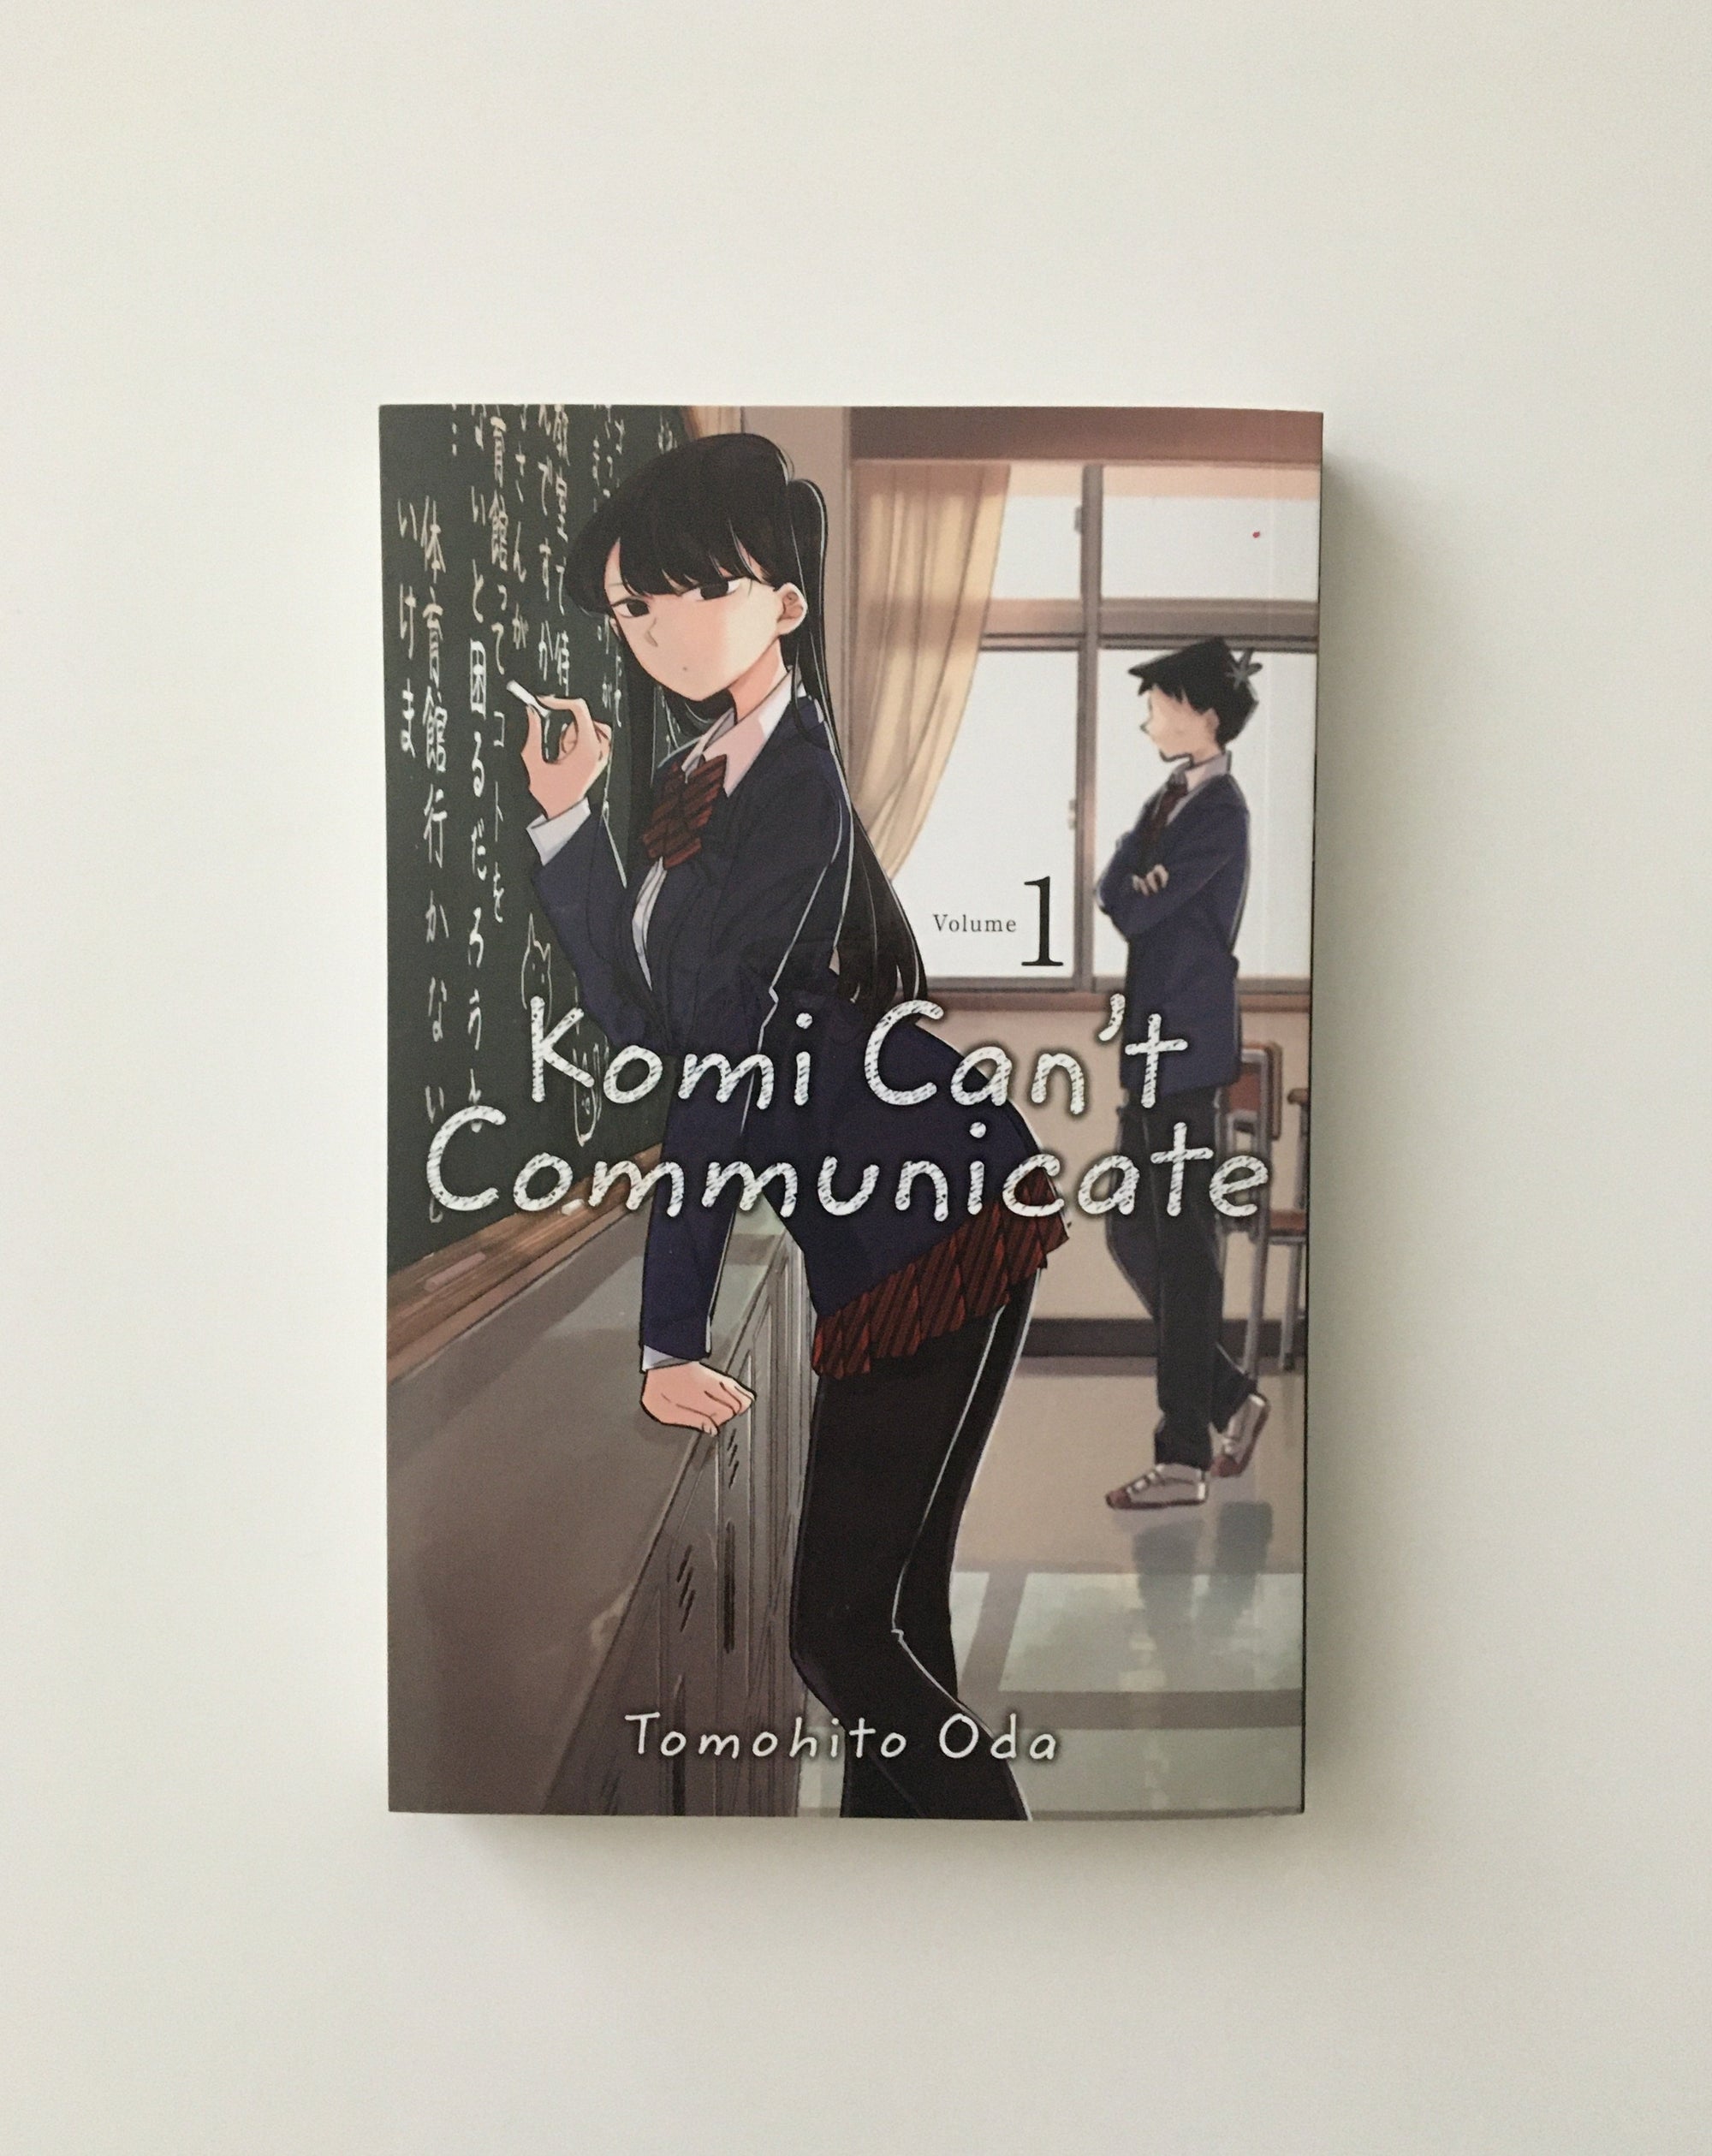 Donate: Komi Can't Communicate by Tomohito Odo, book, Ten Dollar Books, Ten Dollar Books